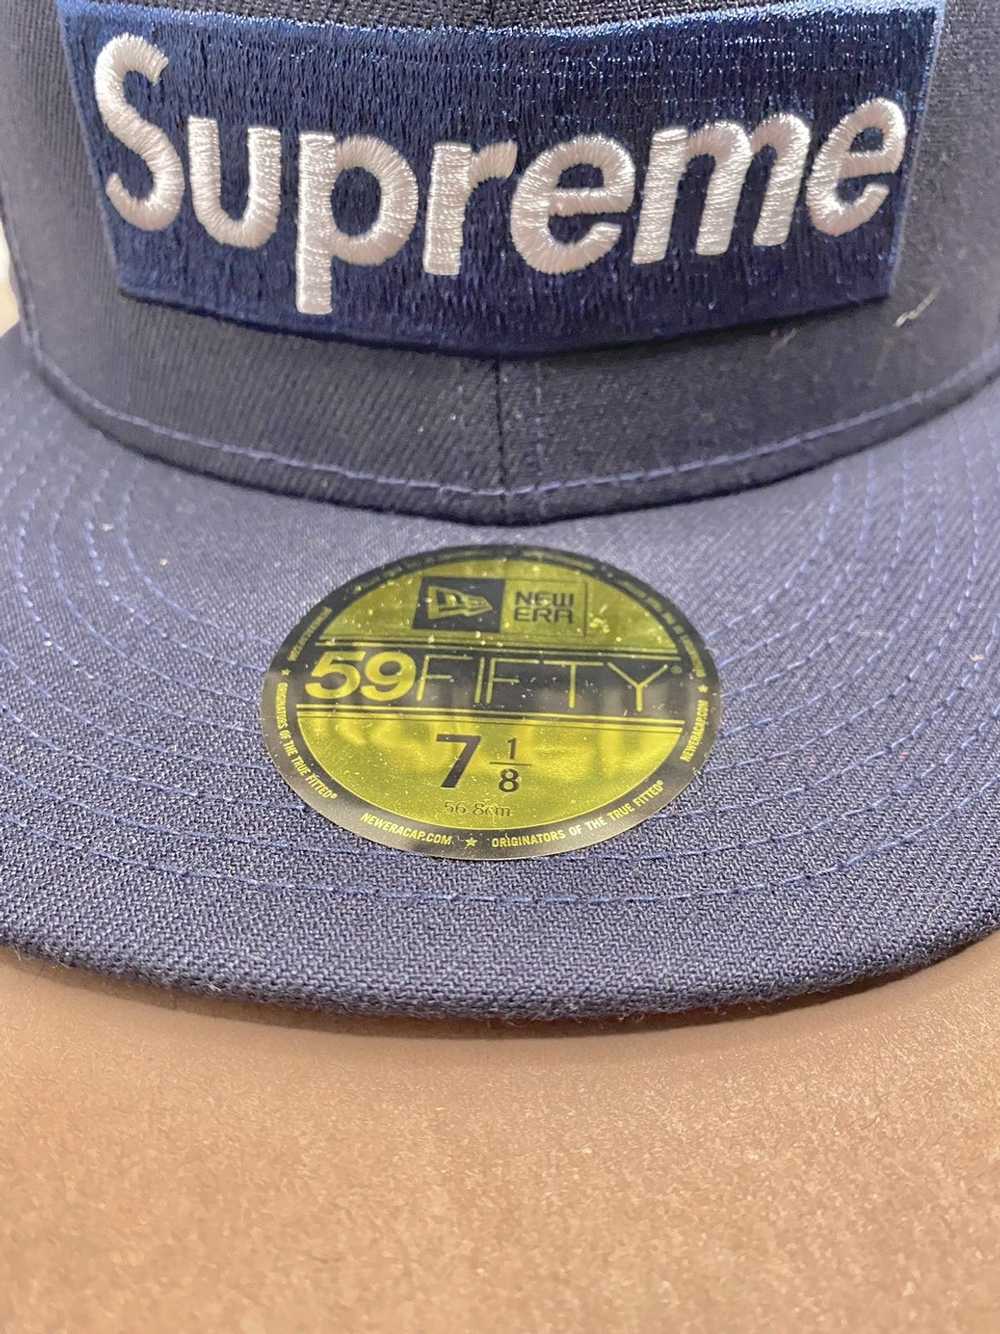 Supreme Supreme hat - image 5